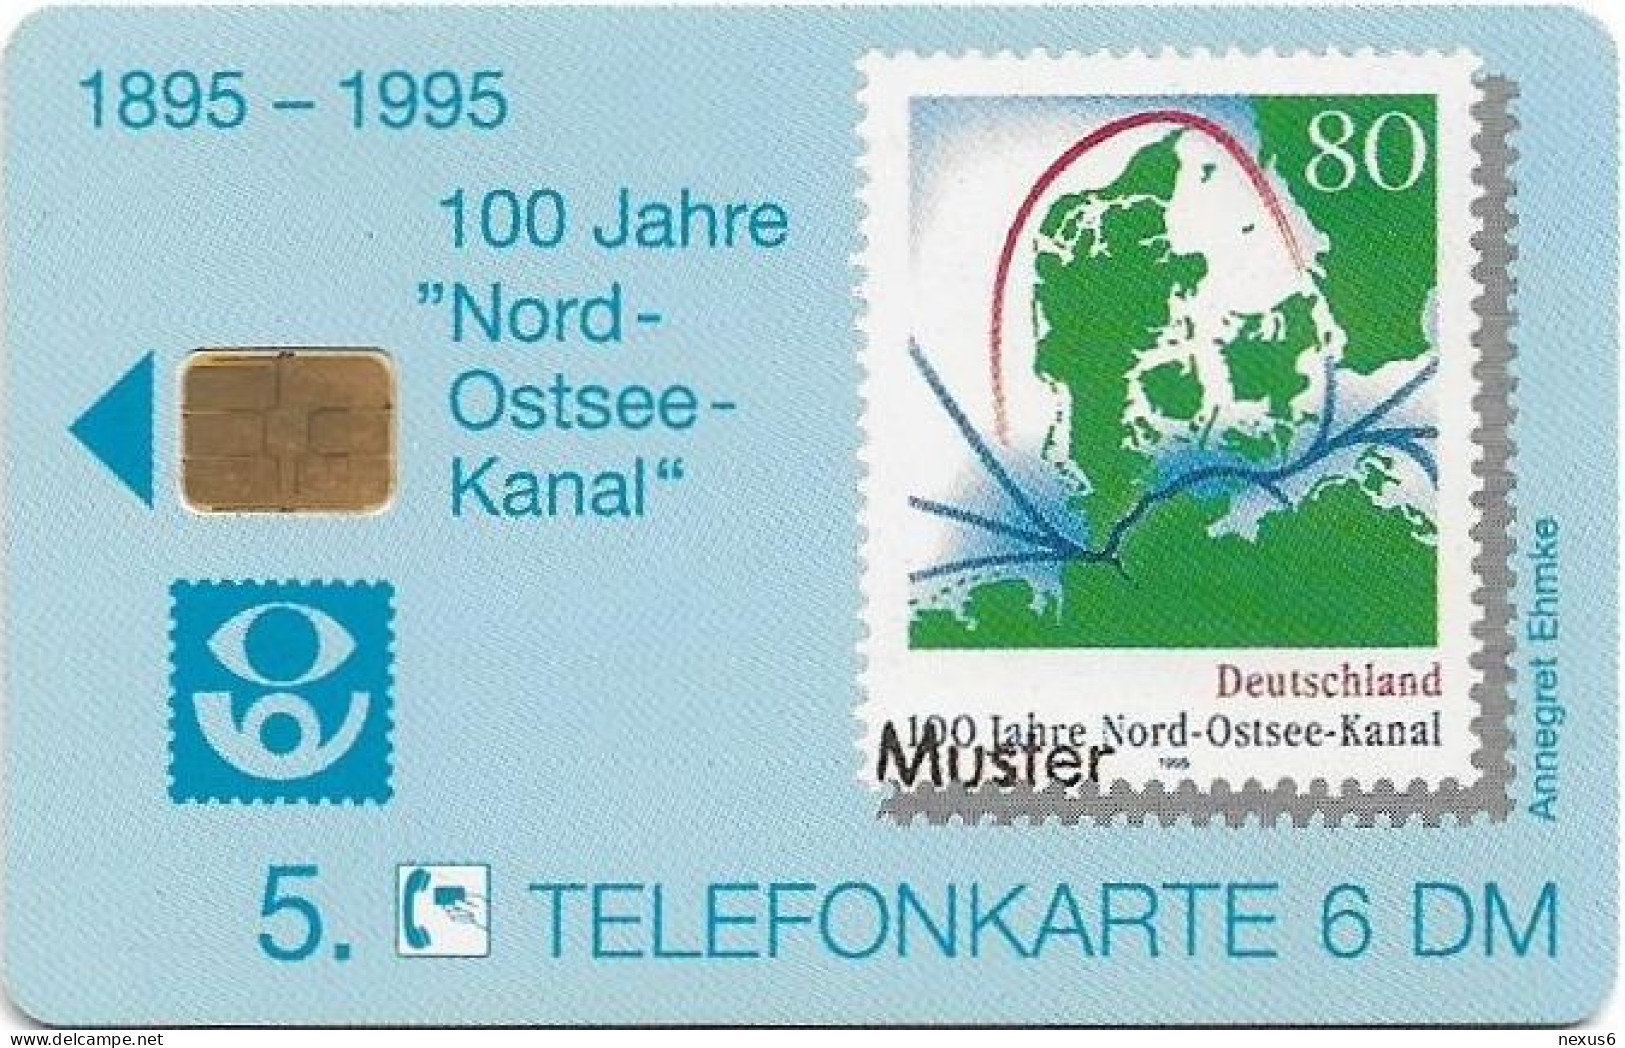 Germany - Kieler Philatelisten-Verein (100 Jahre Nord-Ostsee-Kanal) - O 0994 - 06.1995, 6DM, 1.000ex, Mint - O-Serie : Serie Clienti Esclusi Dal Servizio Delle Collezioni